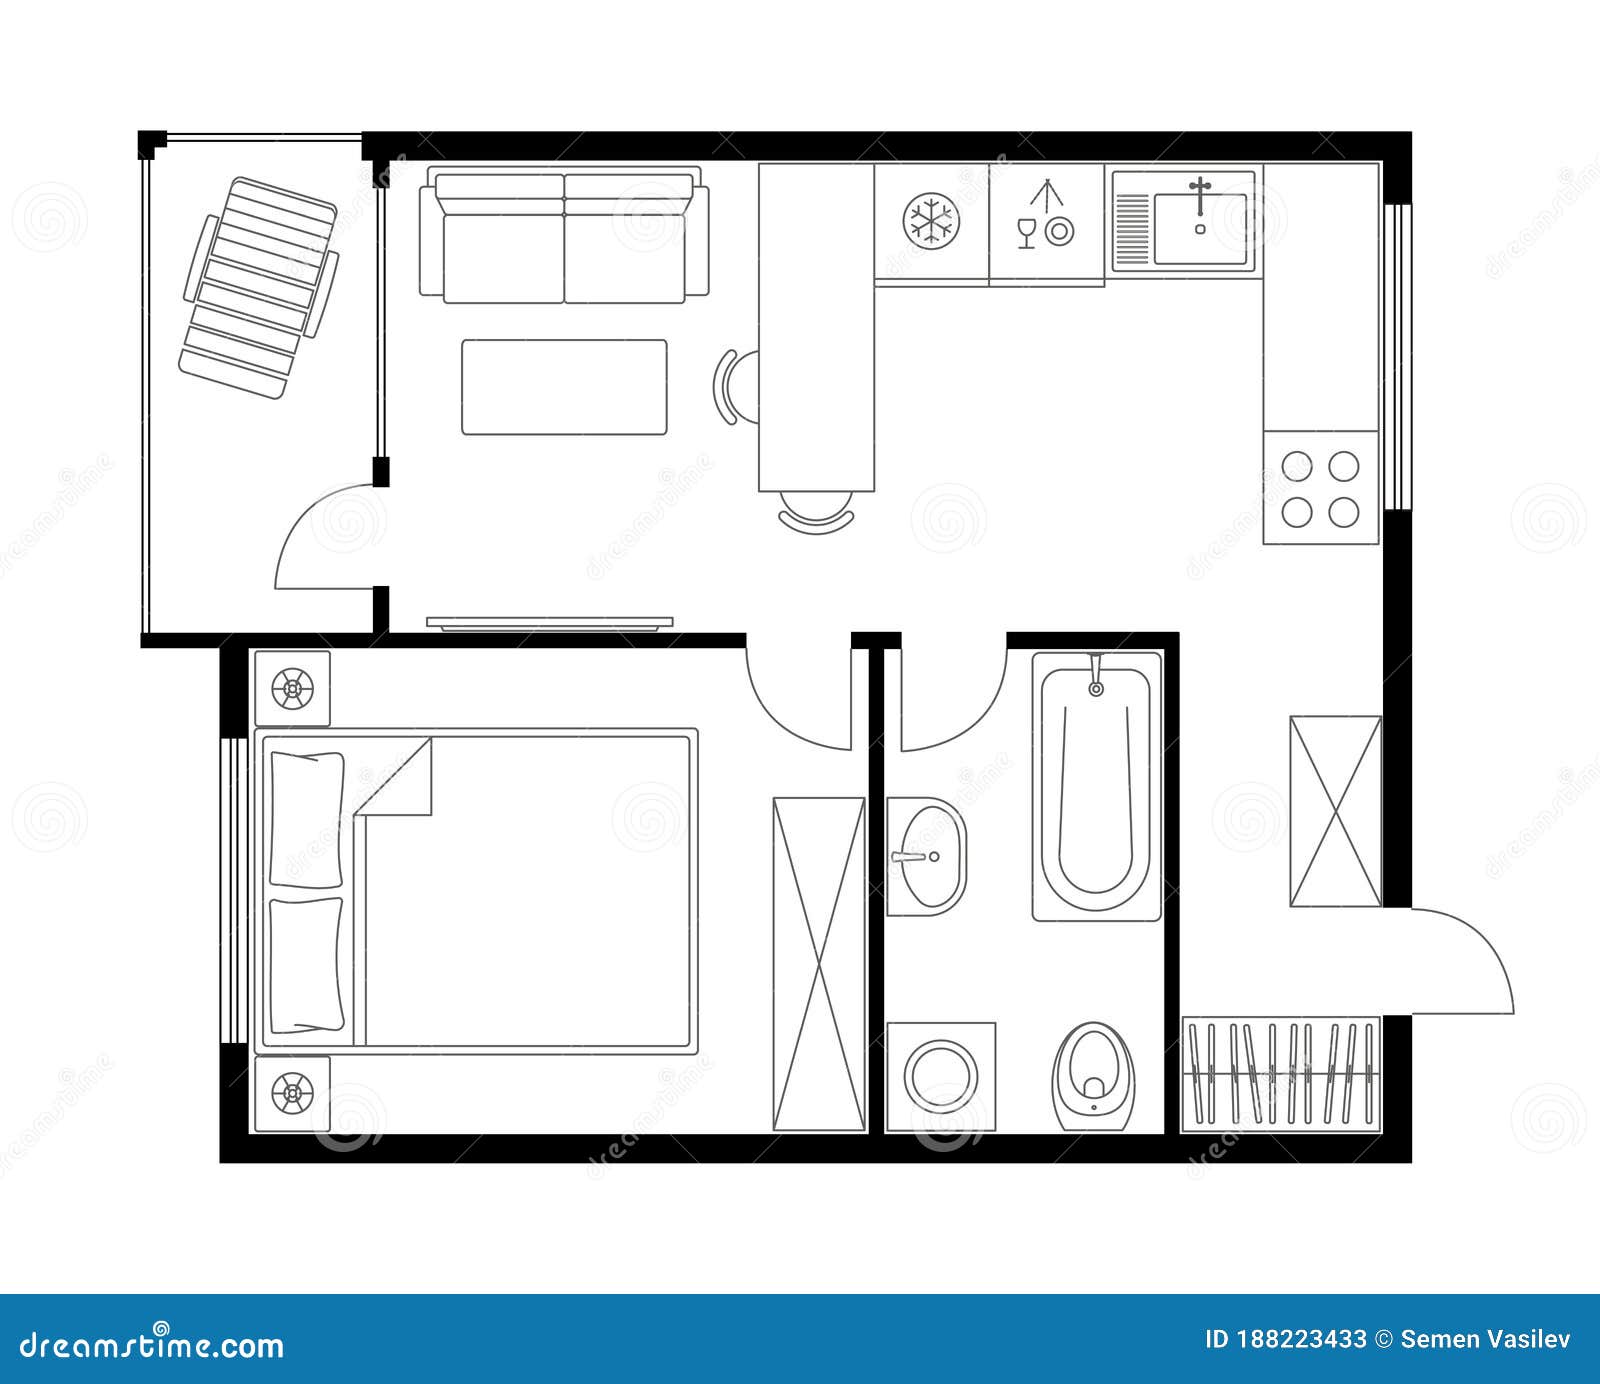 studio apartment layout planner